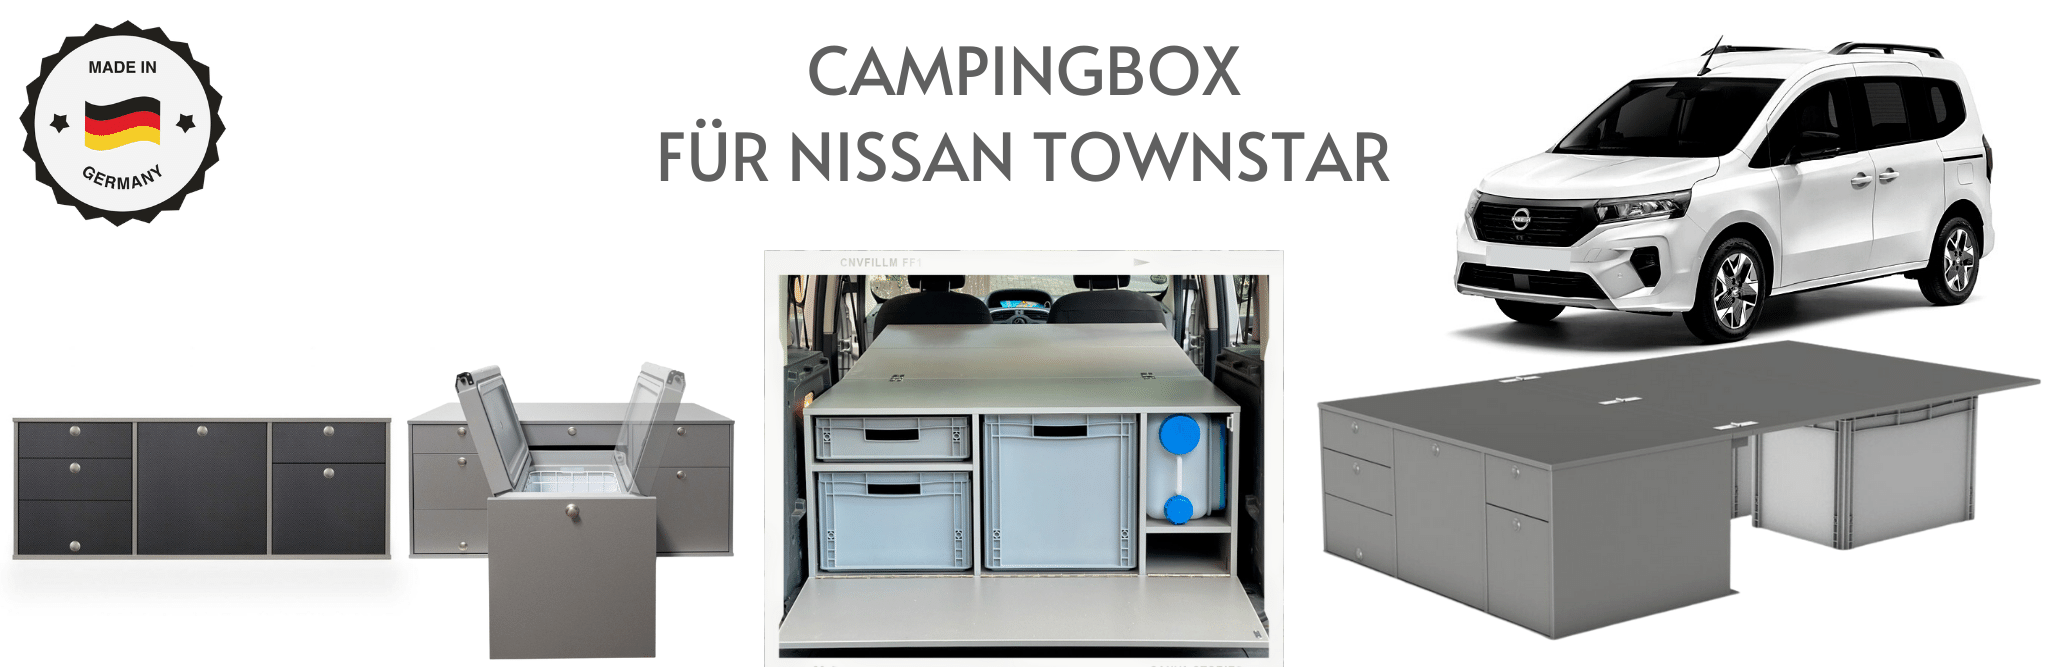 Campingbox Campingküche für Nissan Townstar